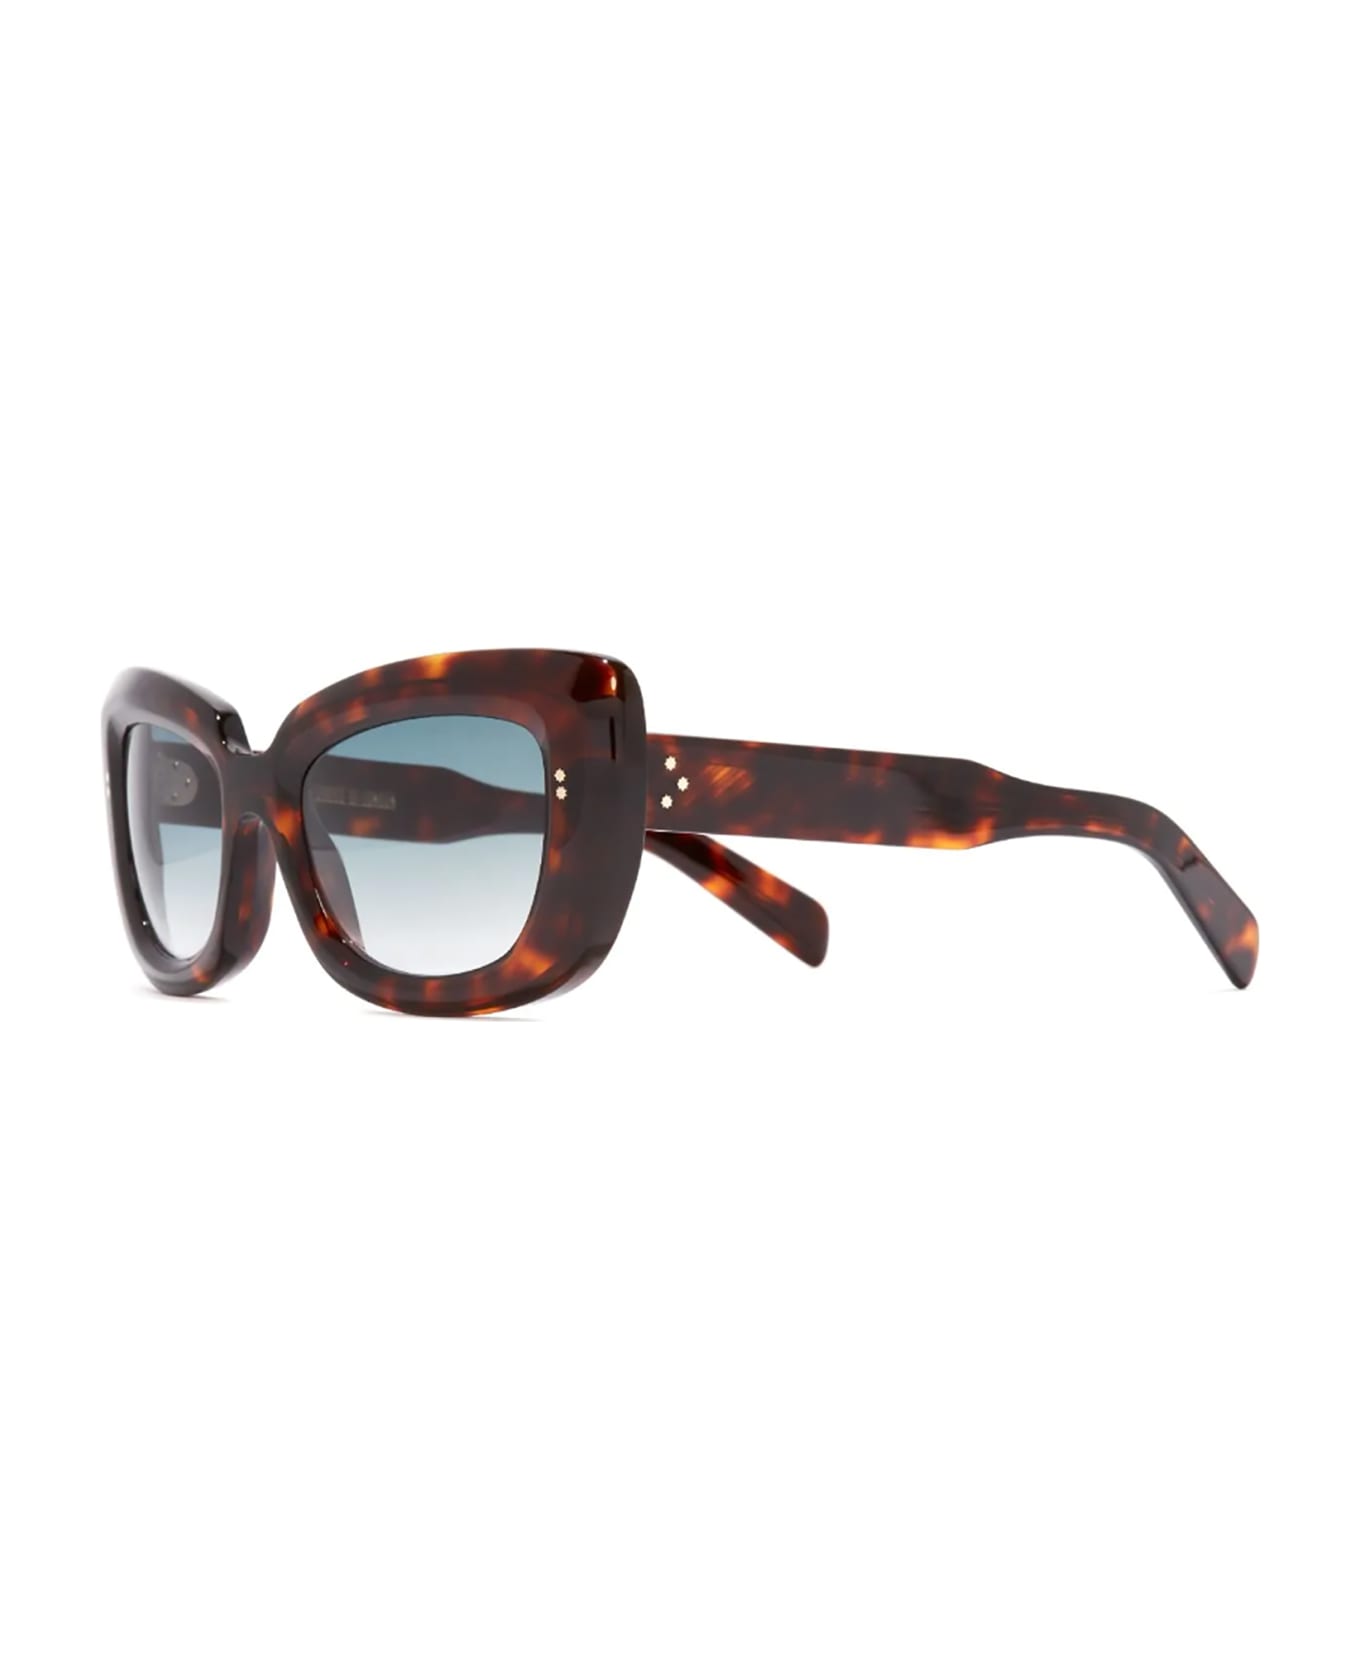 Cutler and Gross 9797/02 Sunglasses - Dark Turtle